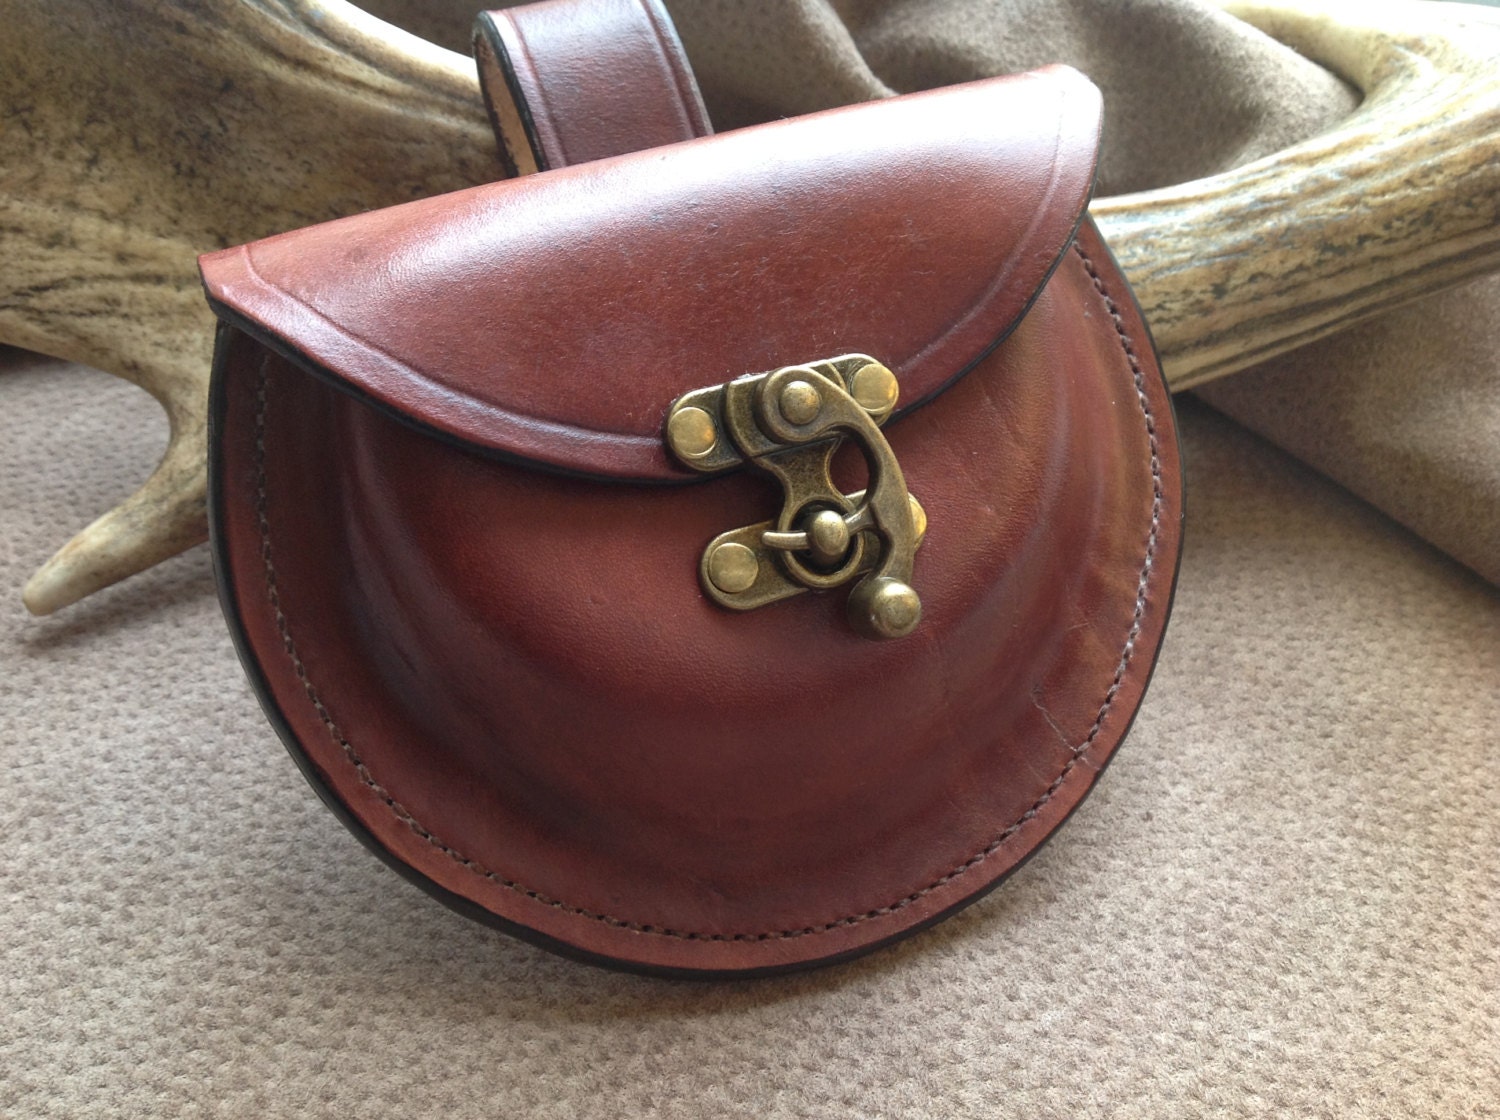 Slingshot / catapult leather ammunition pouch